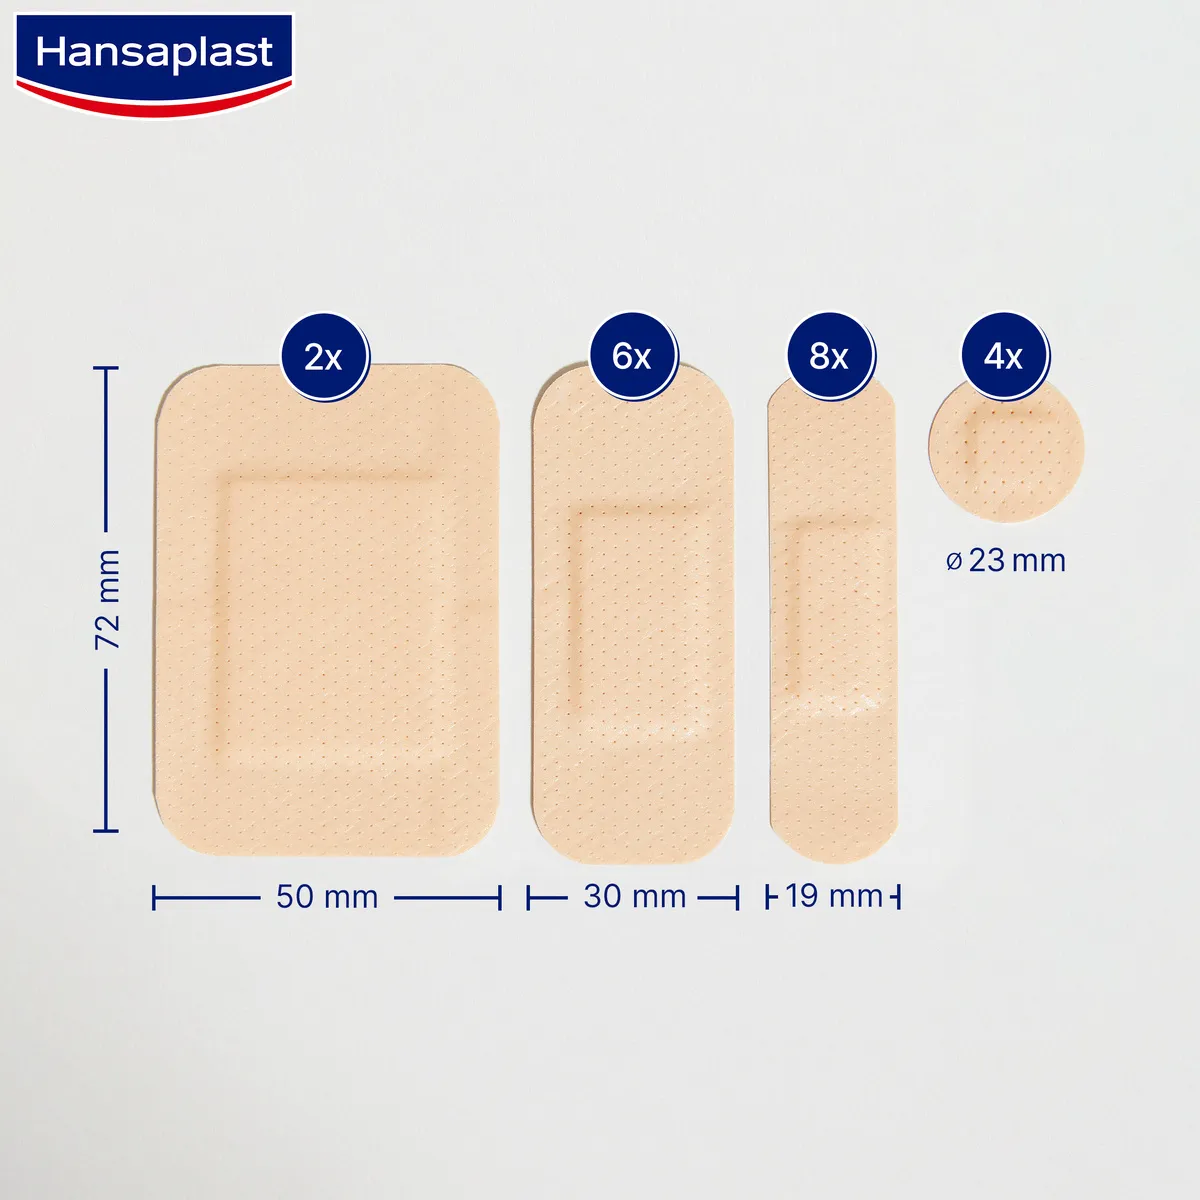 Hansaplast Universal Water resistant 1×40 ks, vodeodolná náplasť